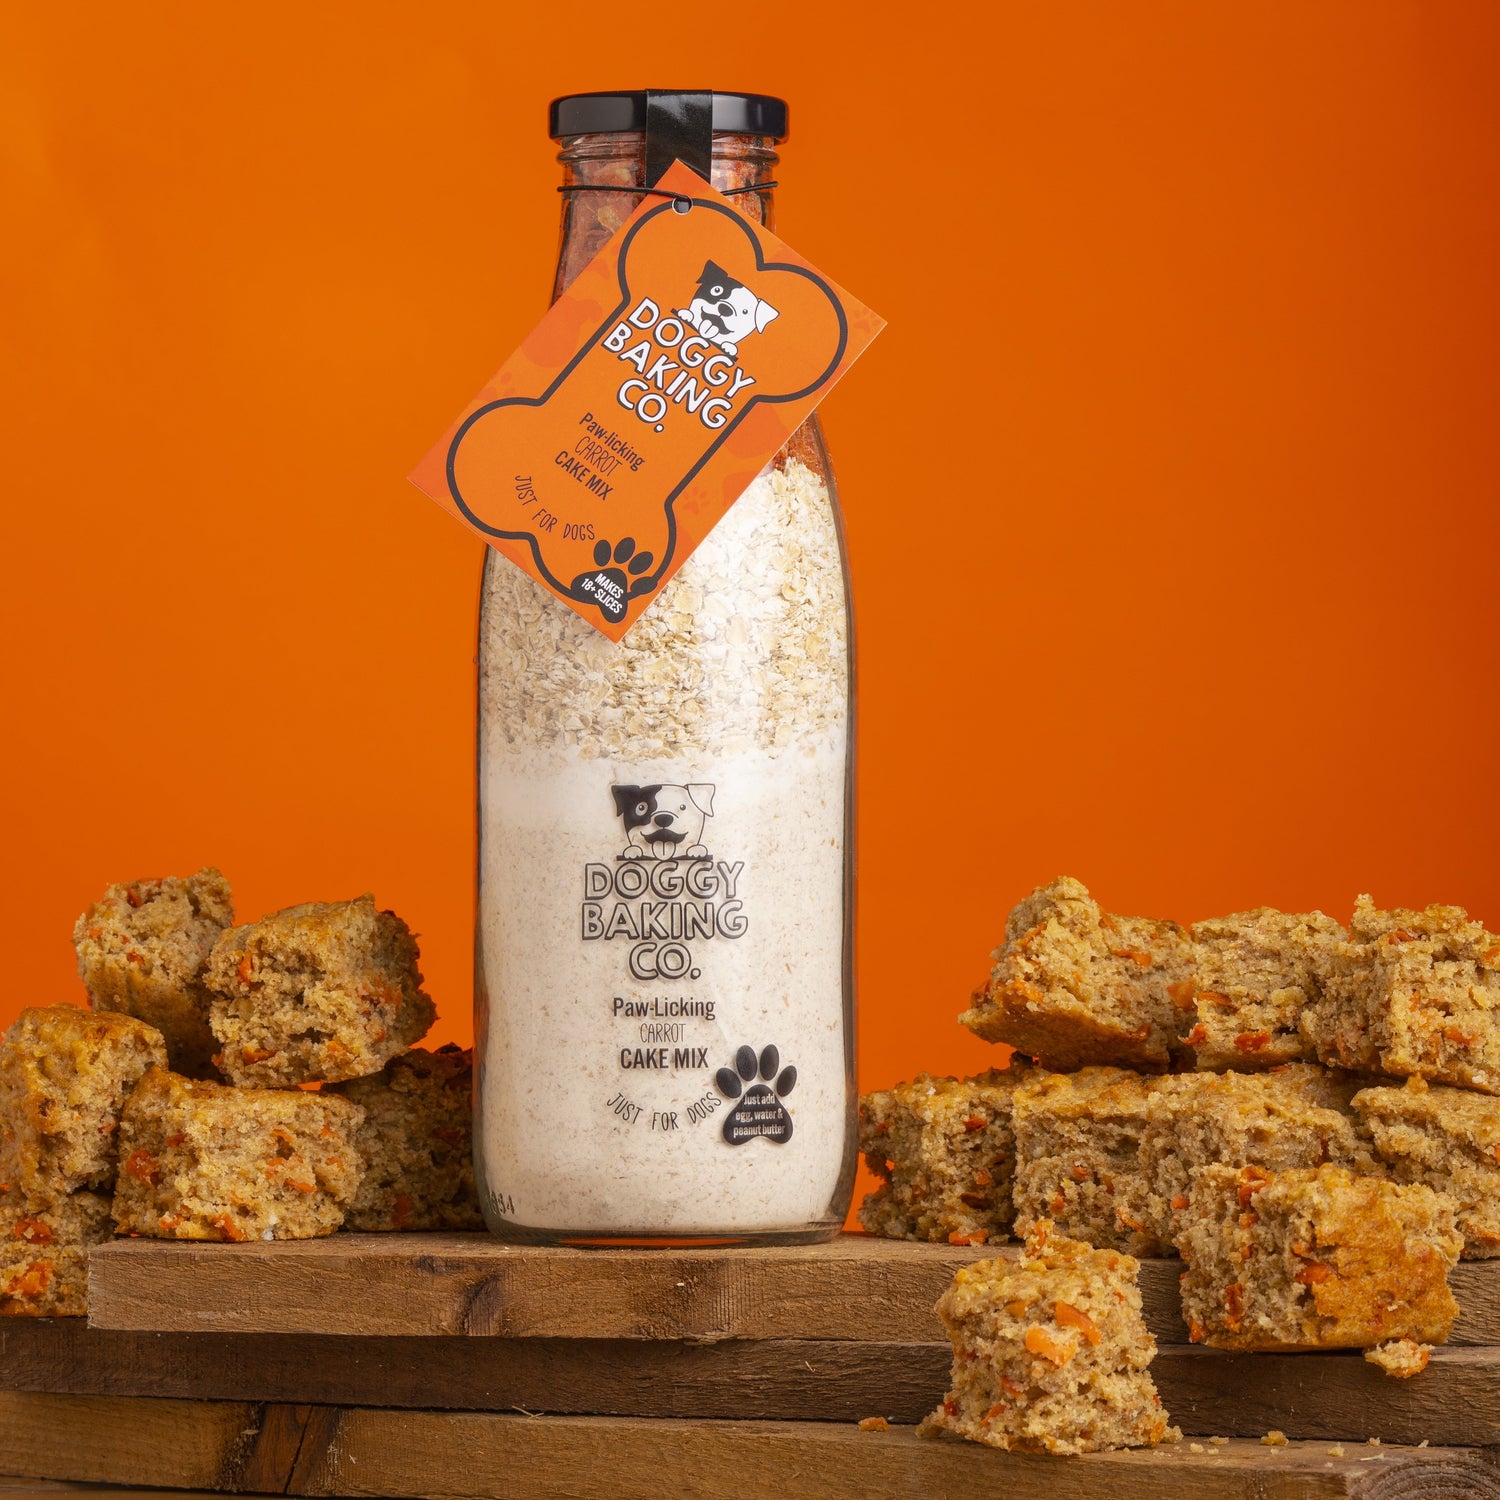 Carrot Cake Mix & Pinkie Bone Eco Toy Gift box - Doggy Baking Co by The Bottled Baking Co